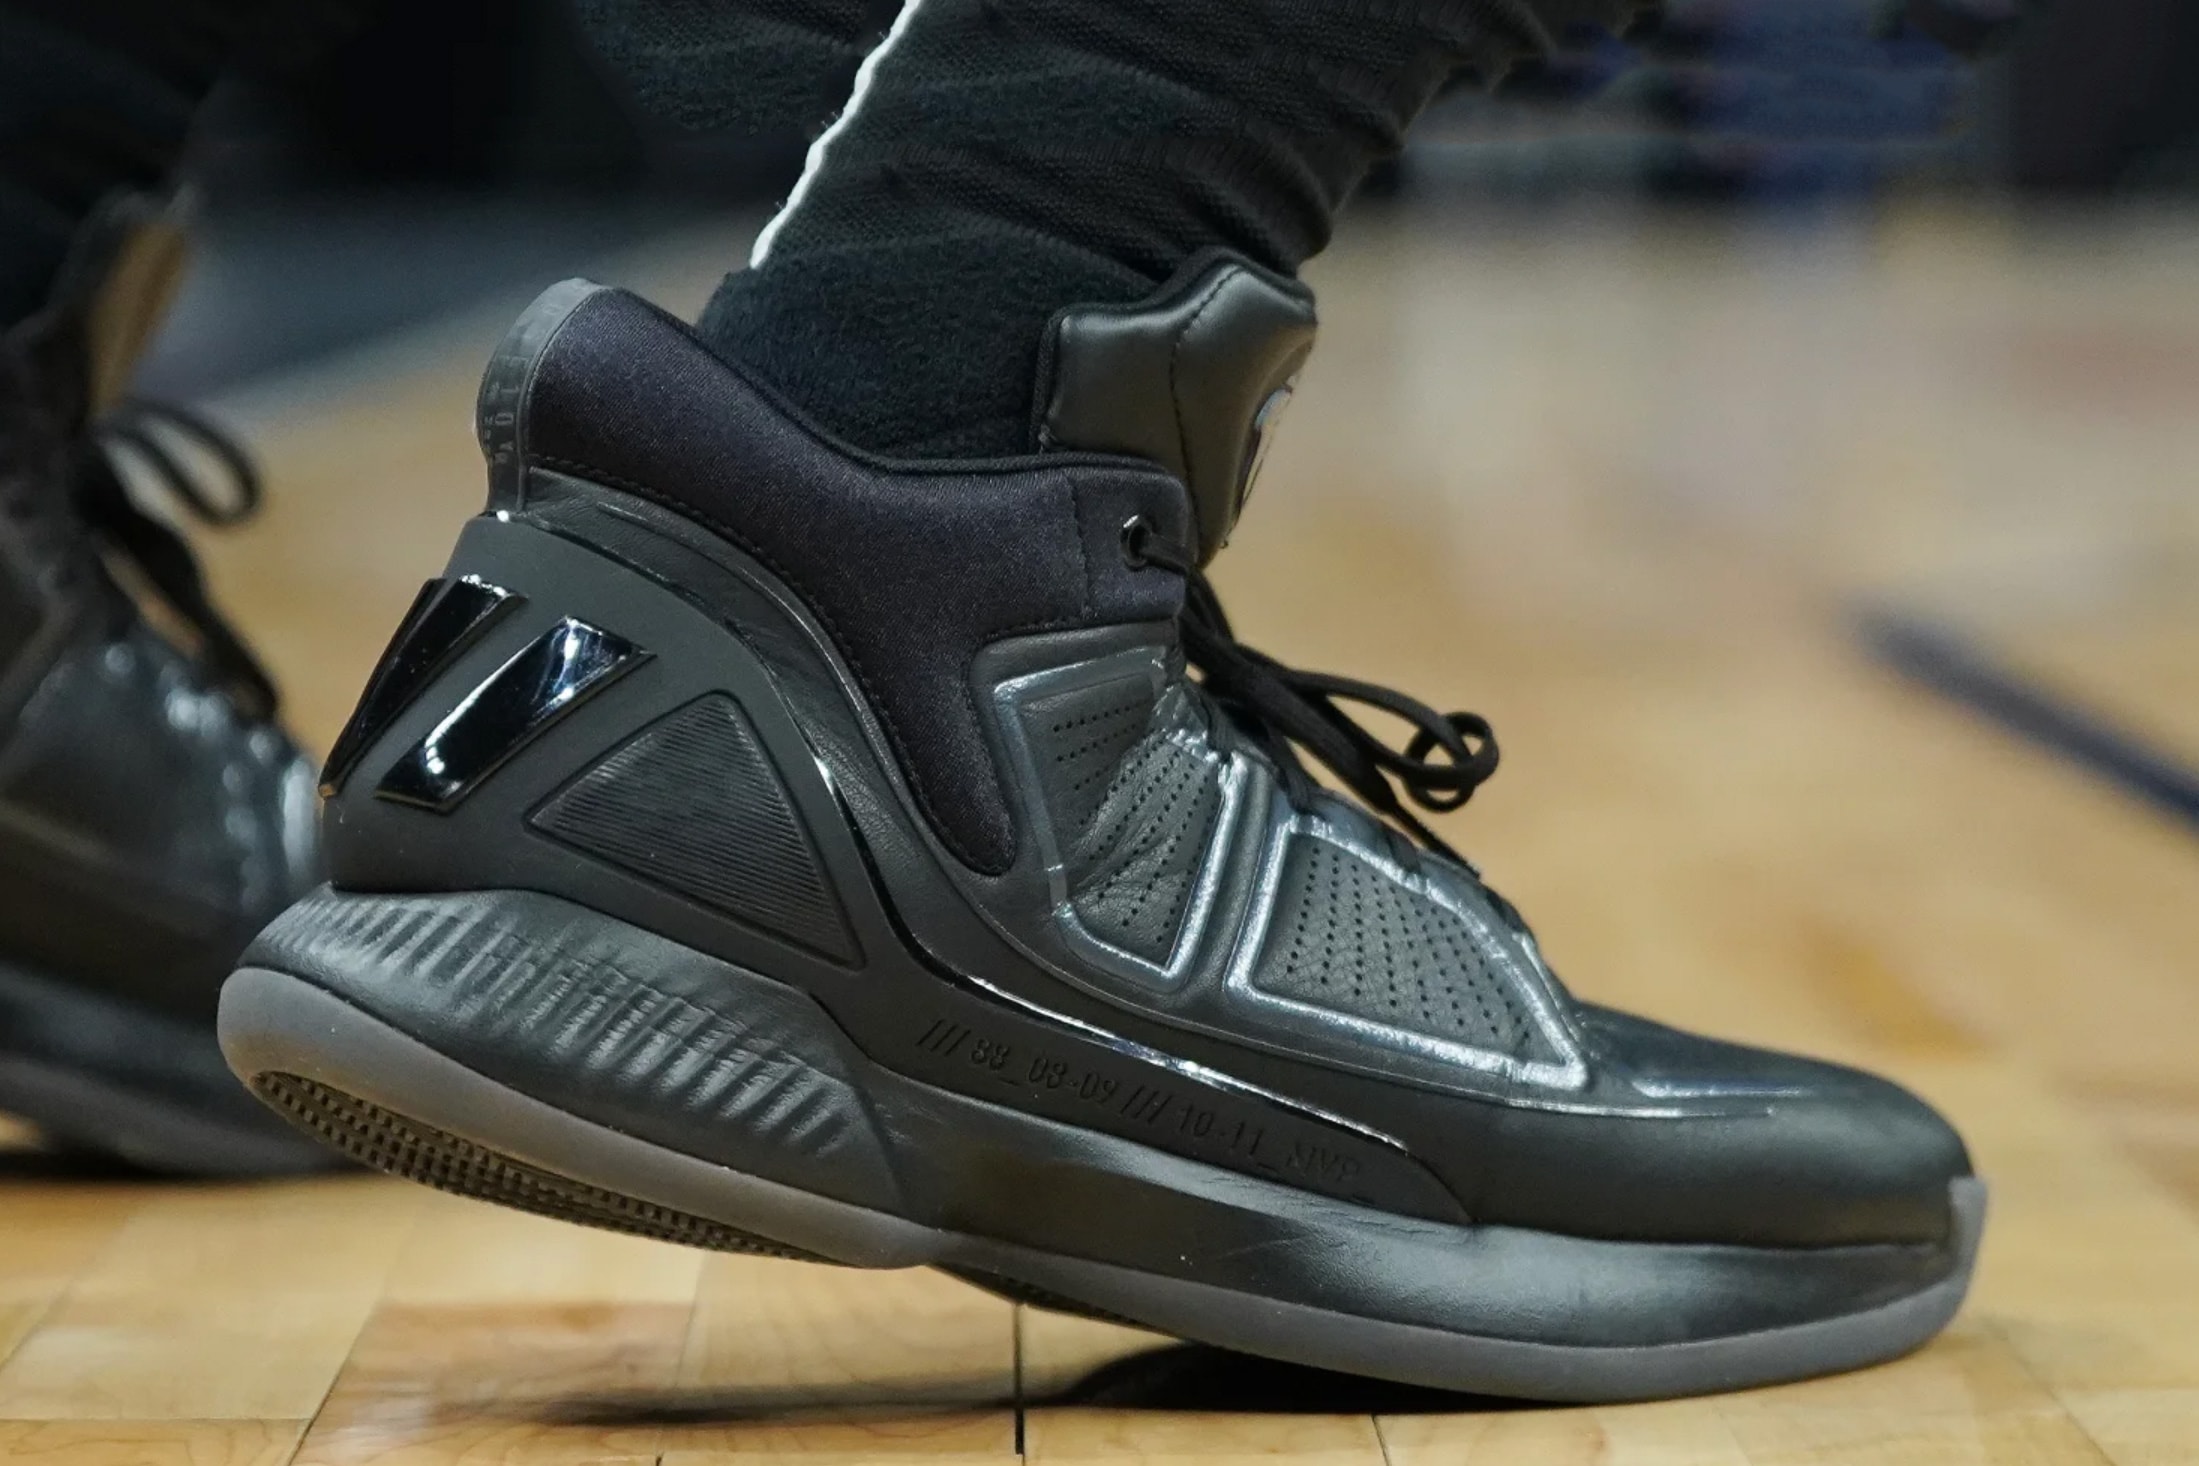 Adidas Men's D Rose 11 Basketball Shoe, Green/Black